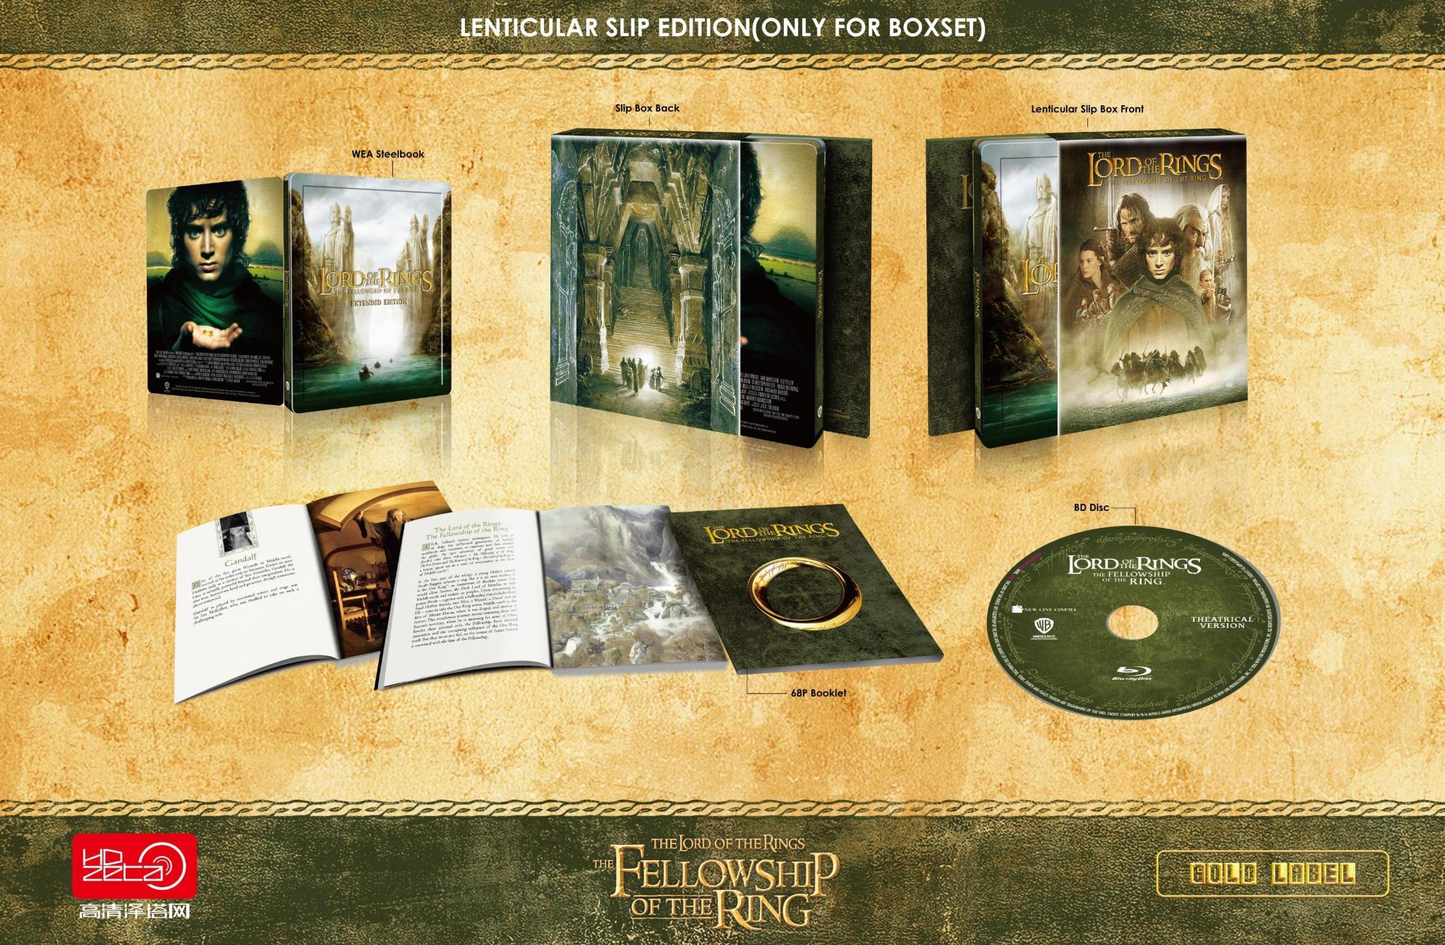 Lord Of The Rings Trilogy 4K Blu-ray Steelbook HDZeta Exclusive Gold Label Lenticular Slip Set